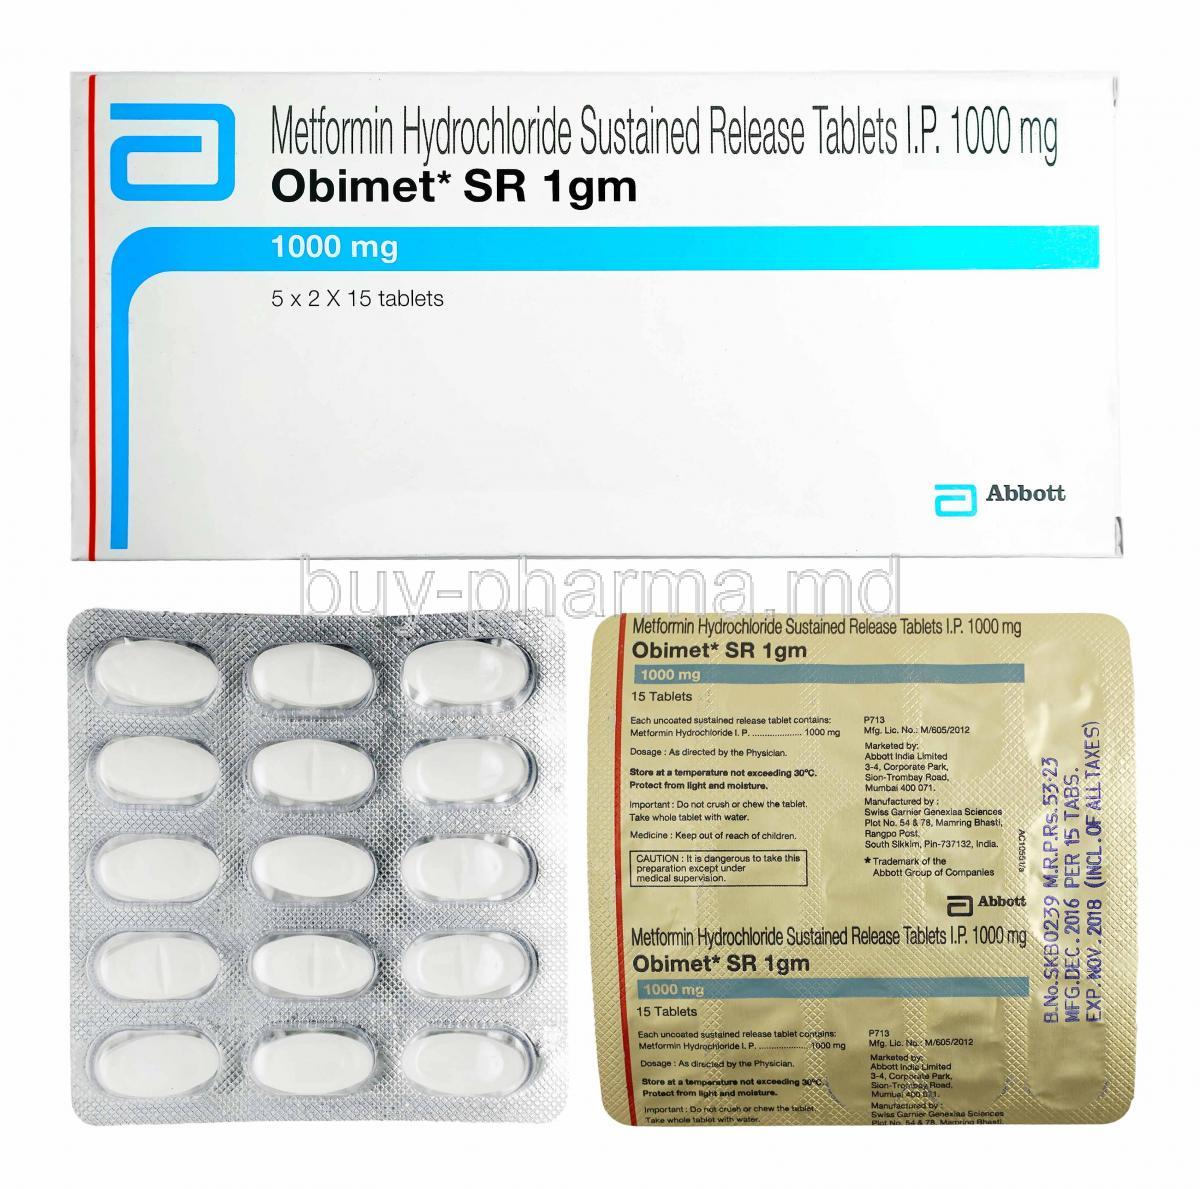 Obimet, Metformin 1000mg, box and tablets